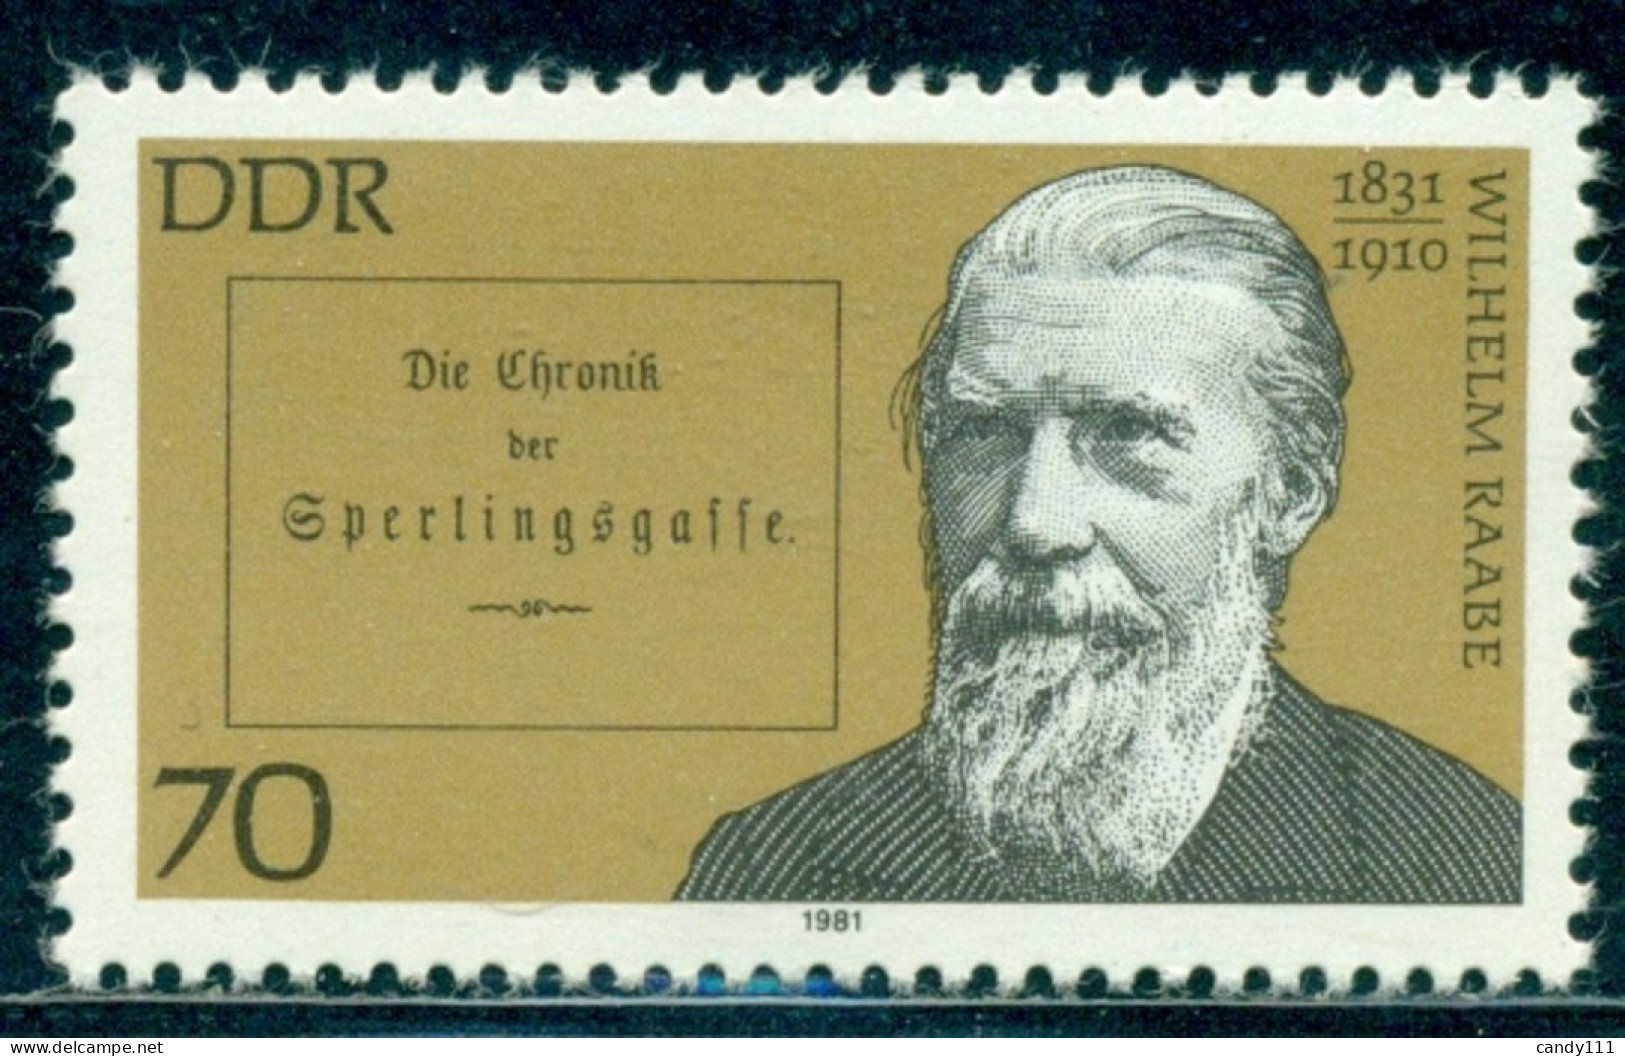 1981 Wilhelm Raabe,german Writer,The Chronicle Of Sparrow Lane/1857,DDR,2608,MNH - Karl Marx